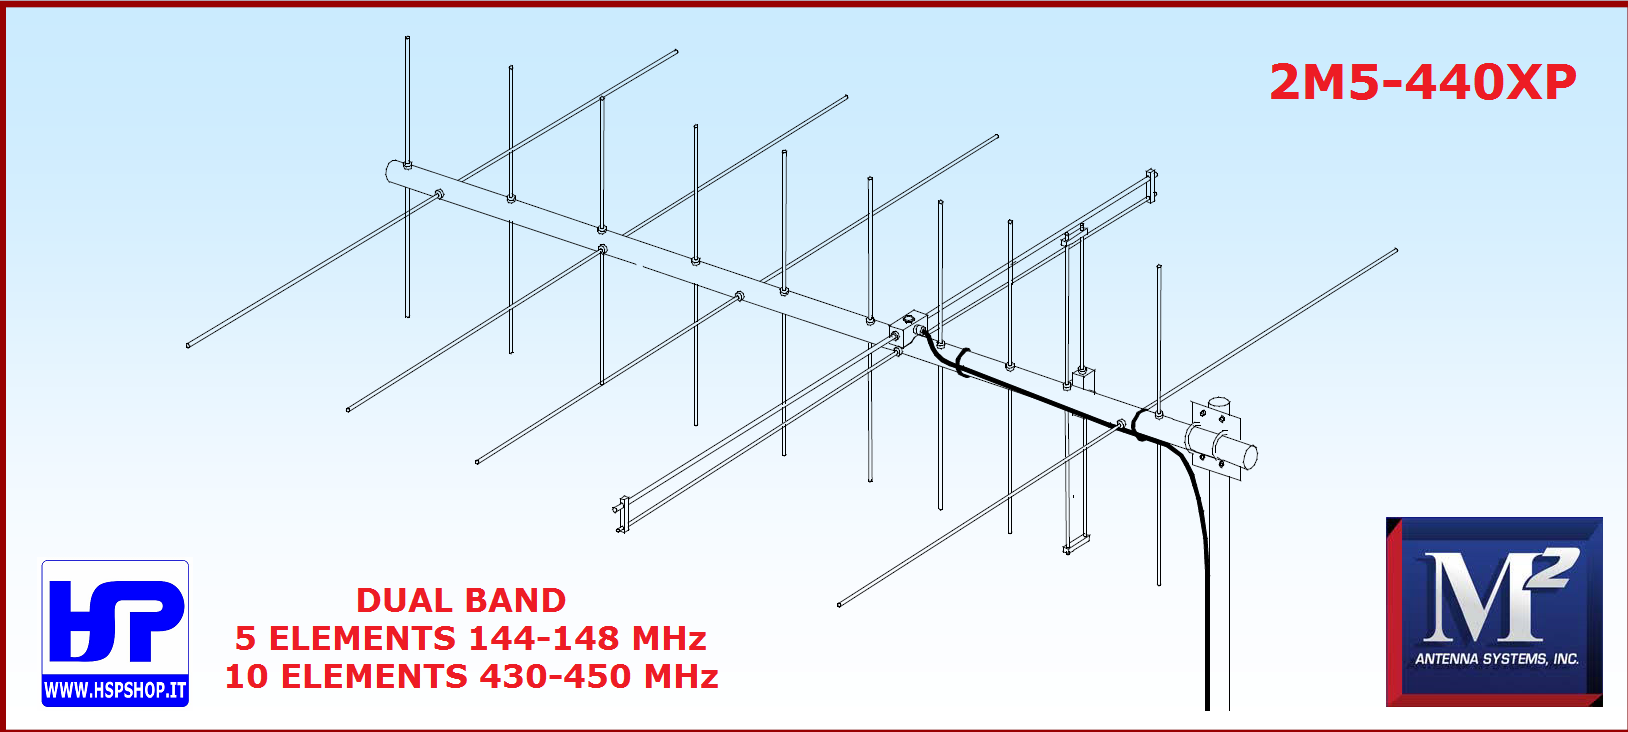 M2 -2M5-440XP - DUAL BAND VHF/UHF 144/430 MHz